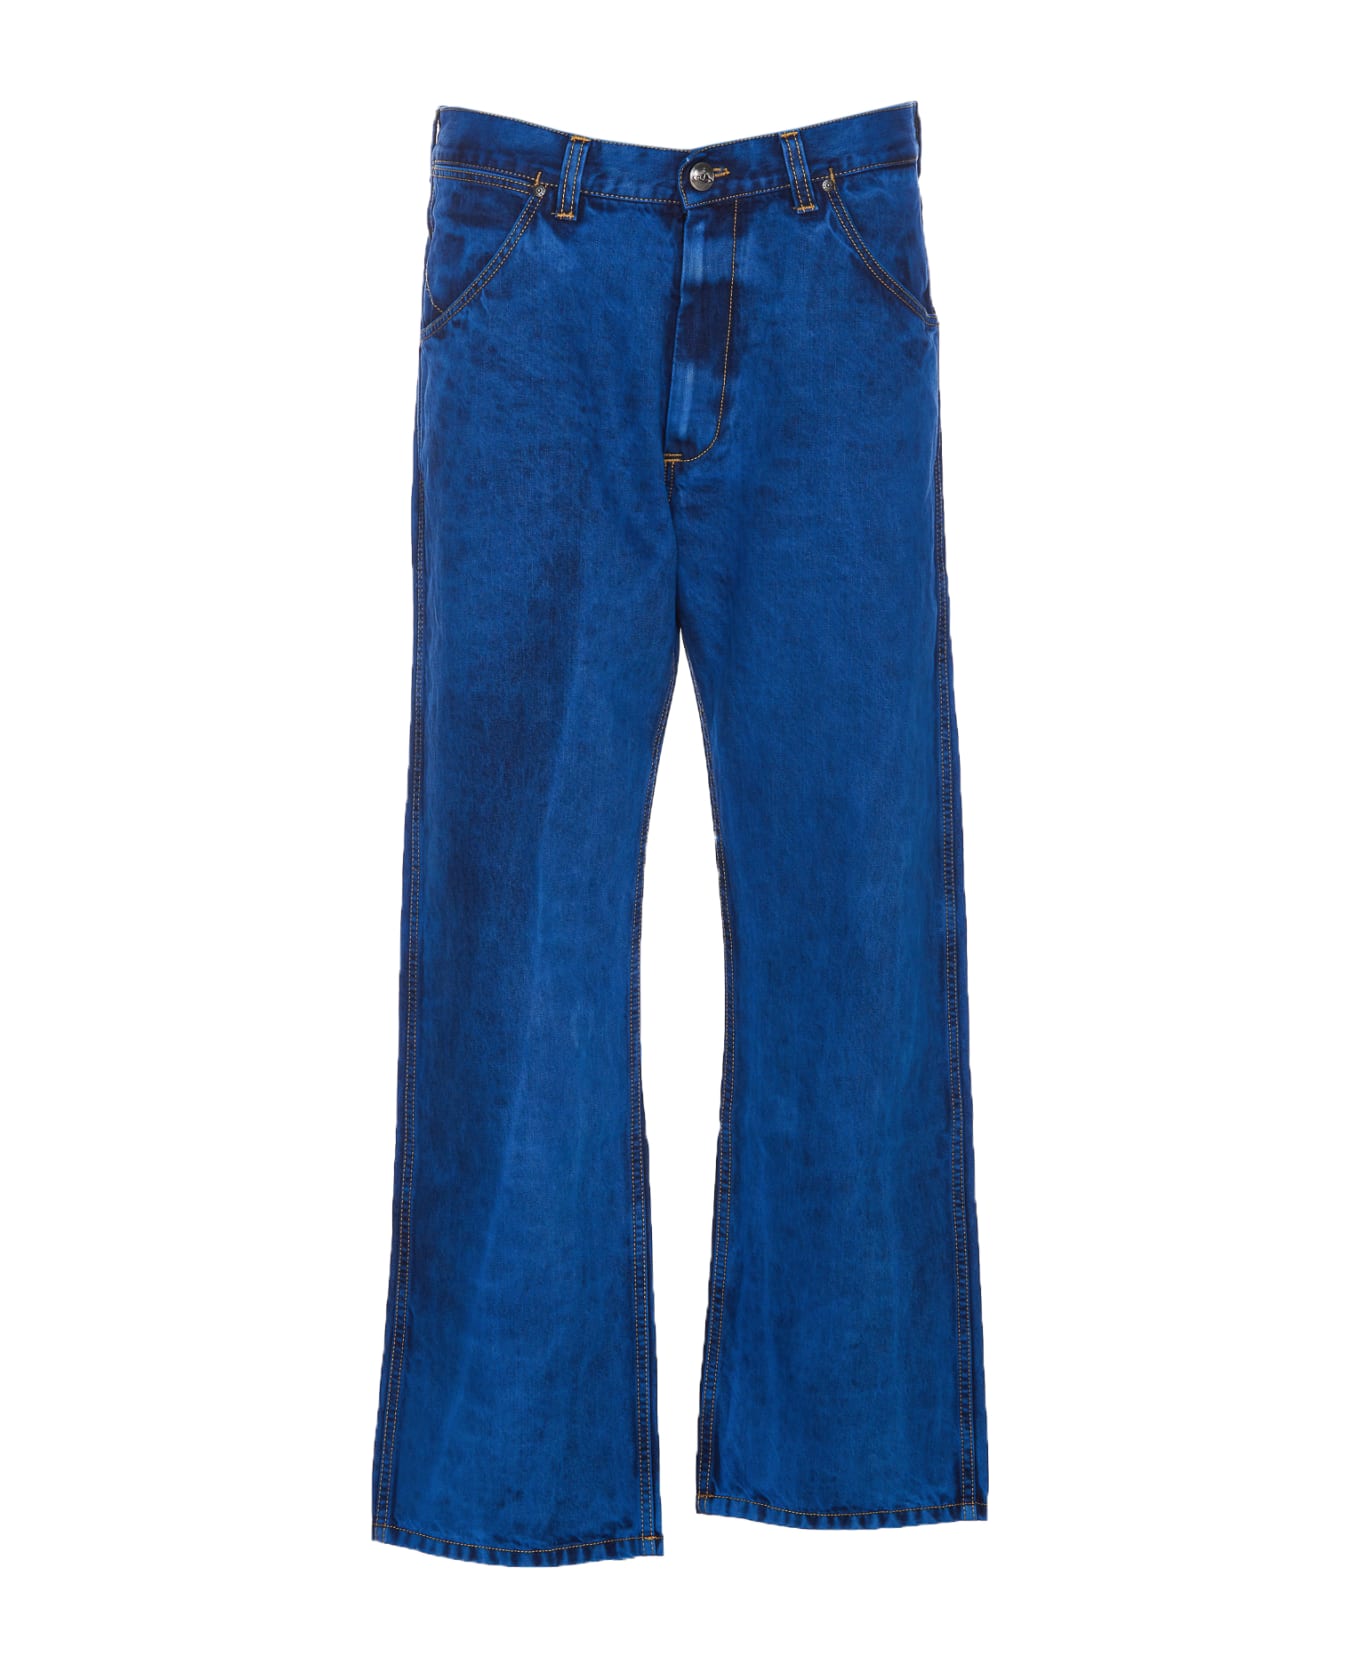 Vivienne Westwood Ranch Jeans - Blue デニム